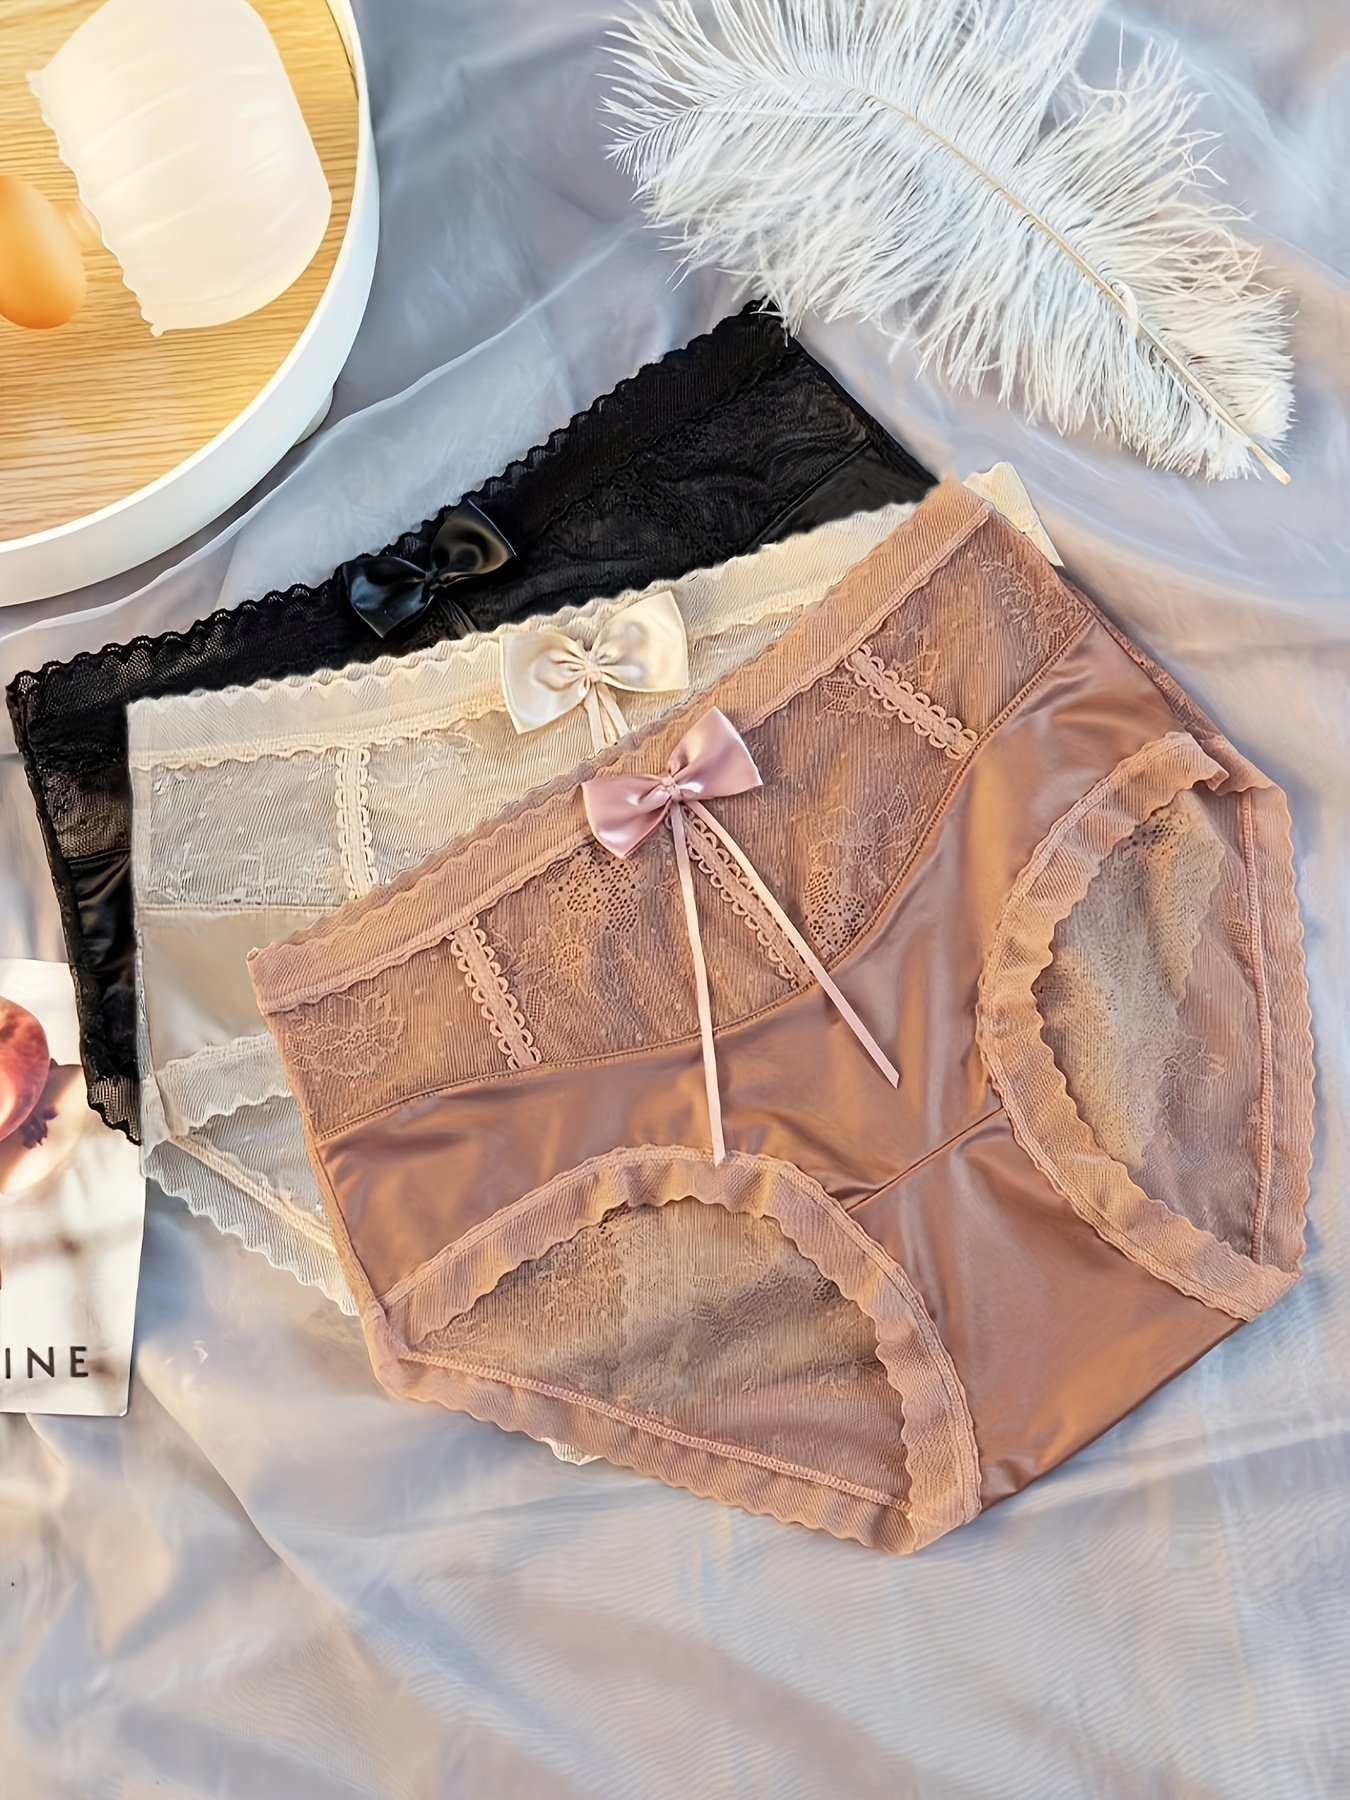 Vana Satin on X: Found one you might like. 😋 #satin #panties #bra   / X